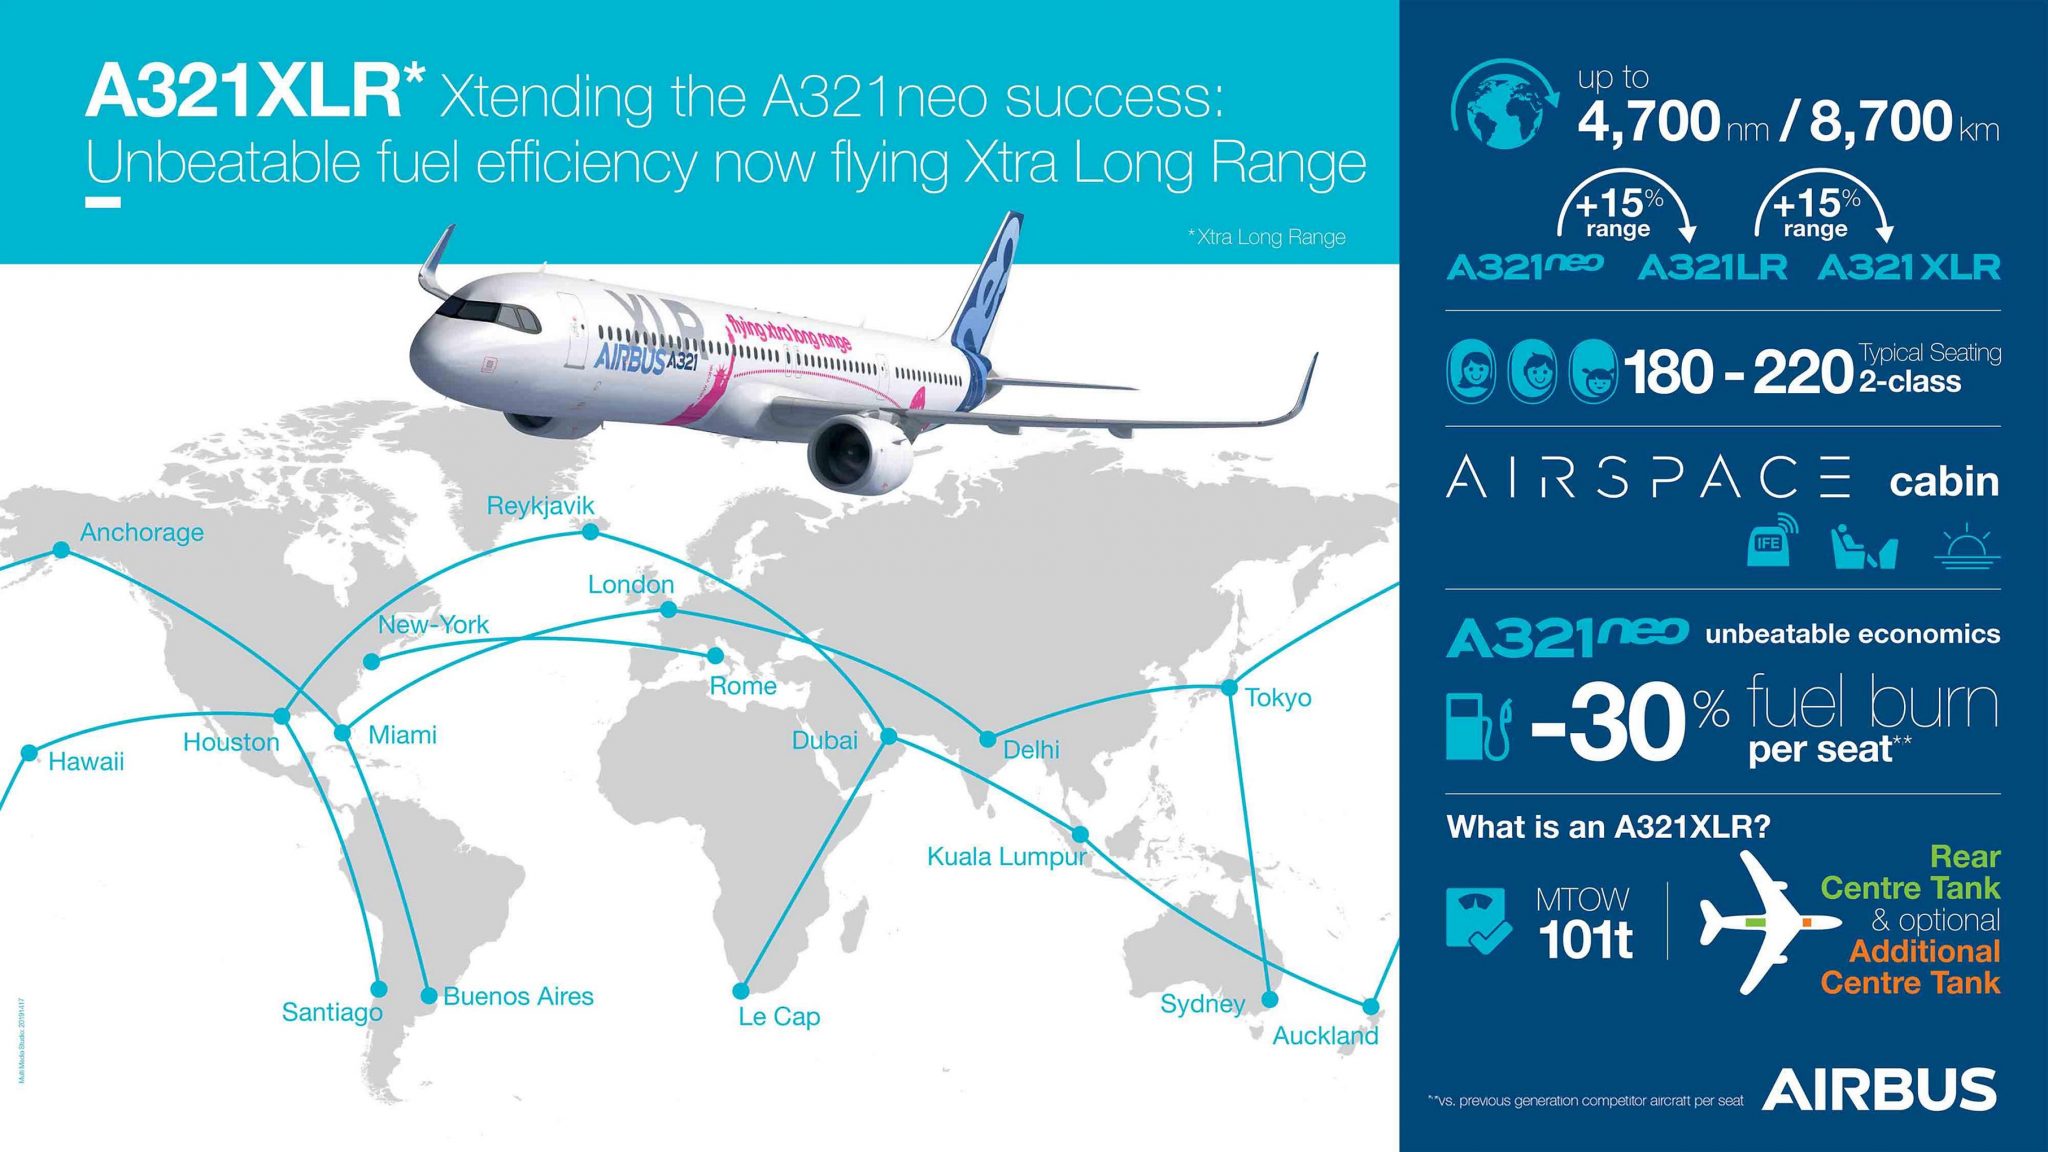 Graphic courtesy of Airbus